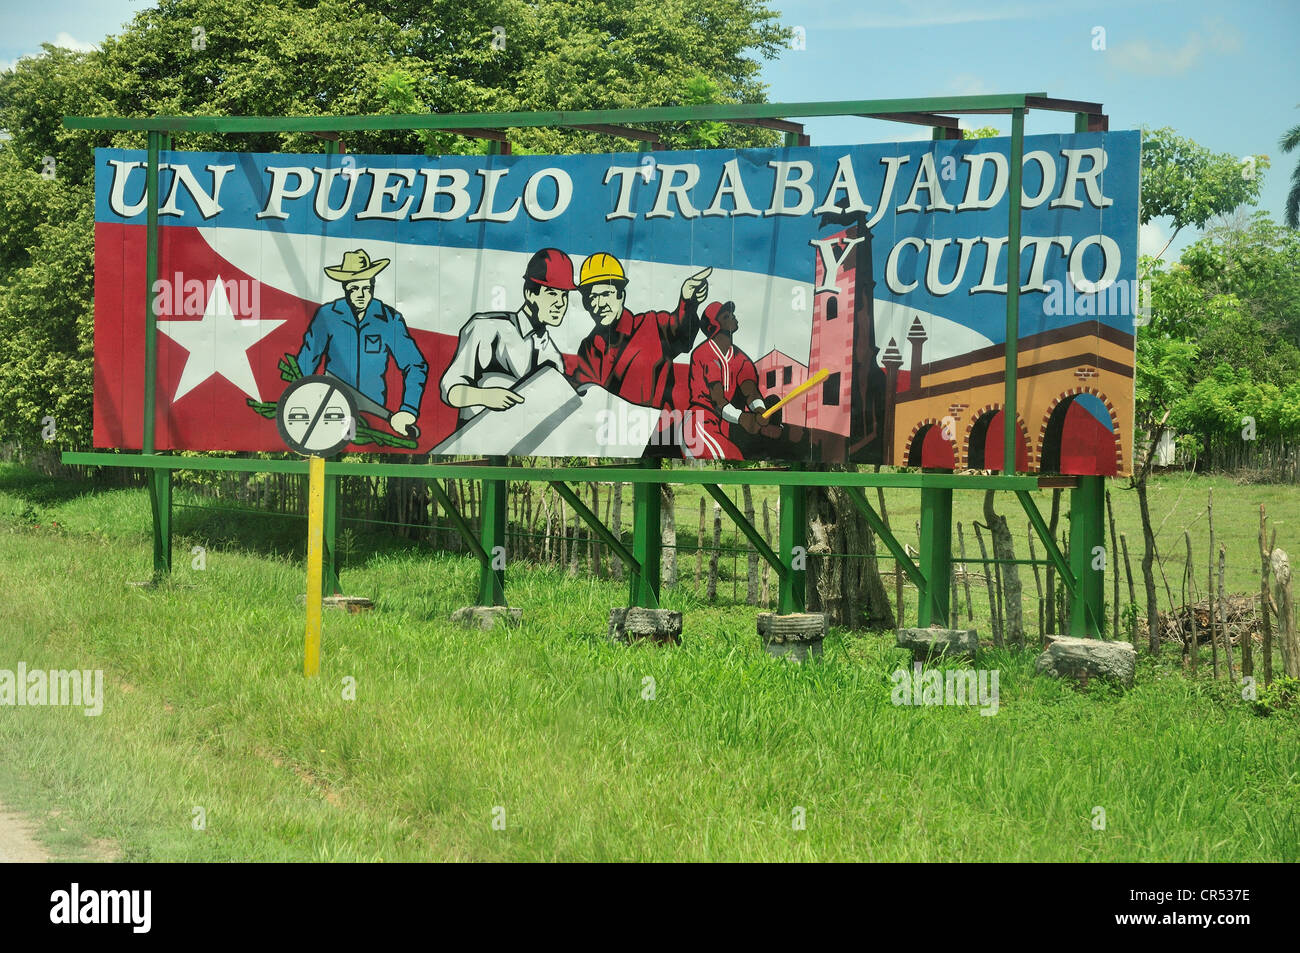 Revolutionäre Propaganda, Un Pueblo Trabajador y Culto, eine fleißigen und zivilisierten Menschen, in der Nähe von Las Tunas, Kuba, Caribbean Stockfoto